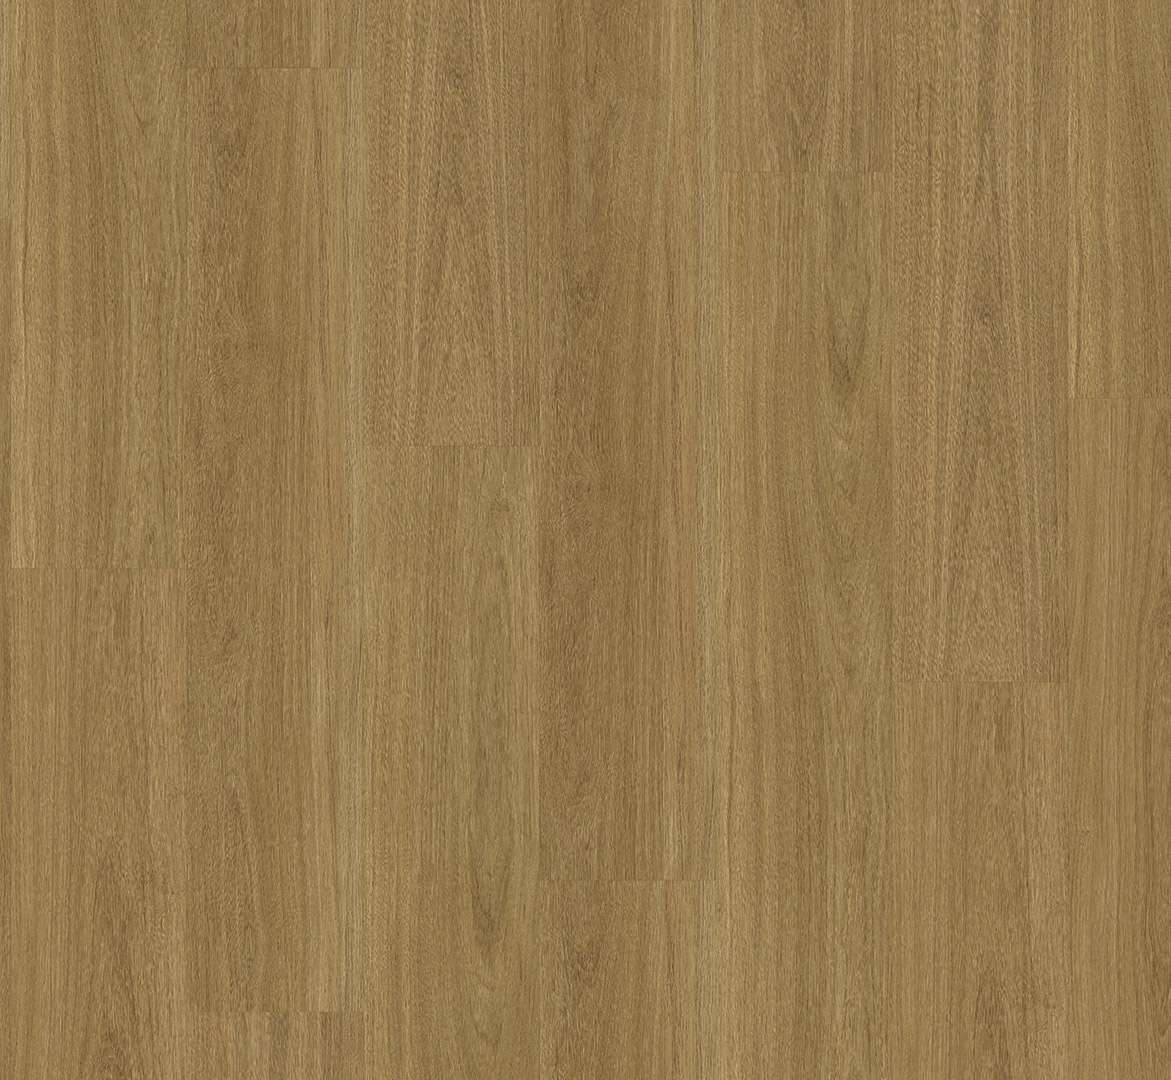 PARADOR Classic 2025 (Dub Oxford karamelově hnědý) 1748869 - 3,35 m2/bal